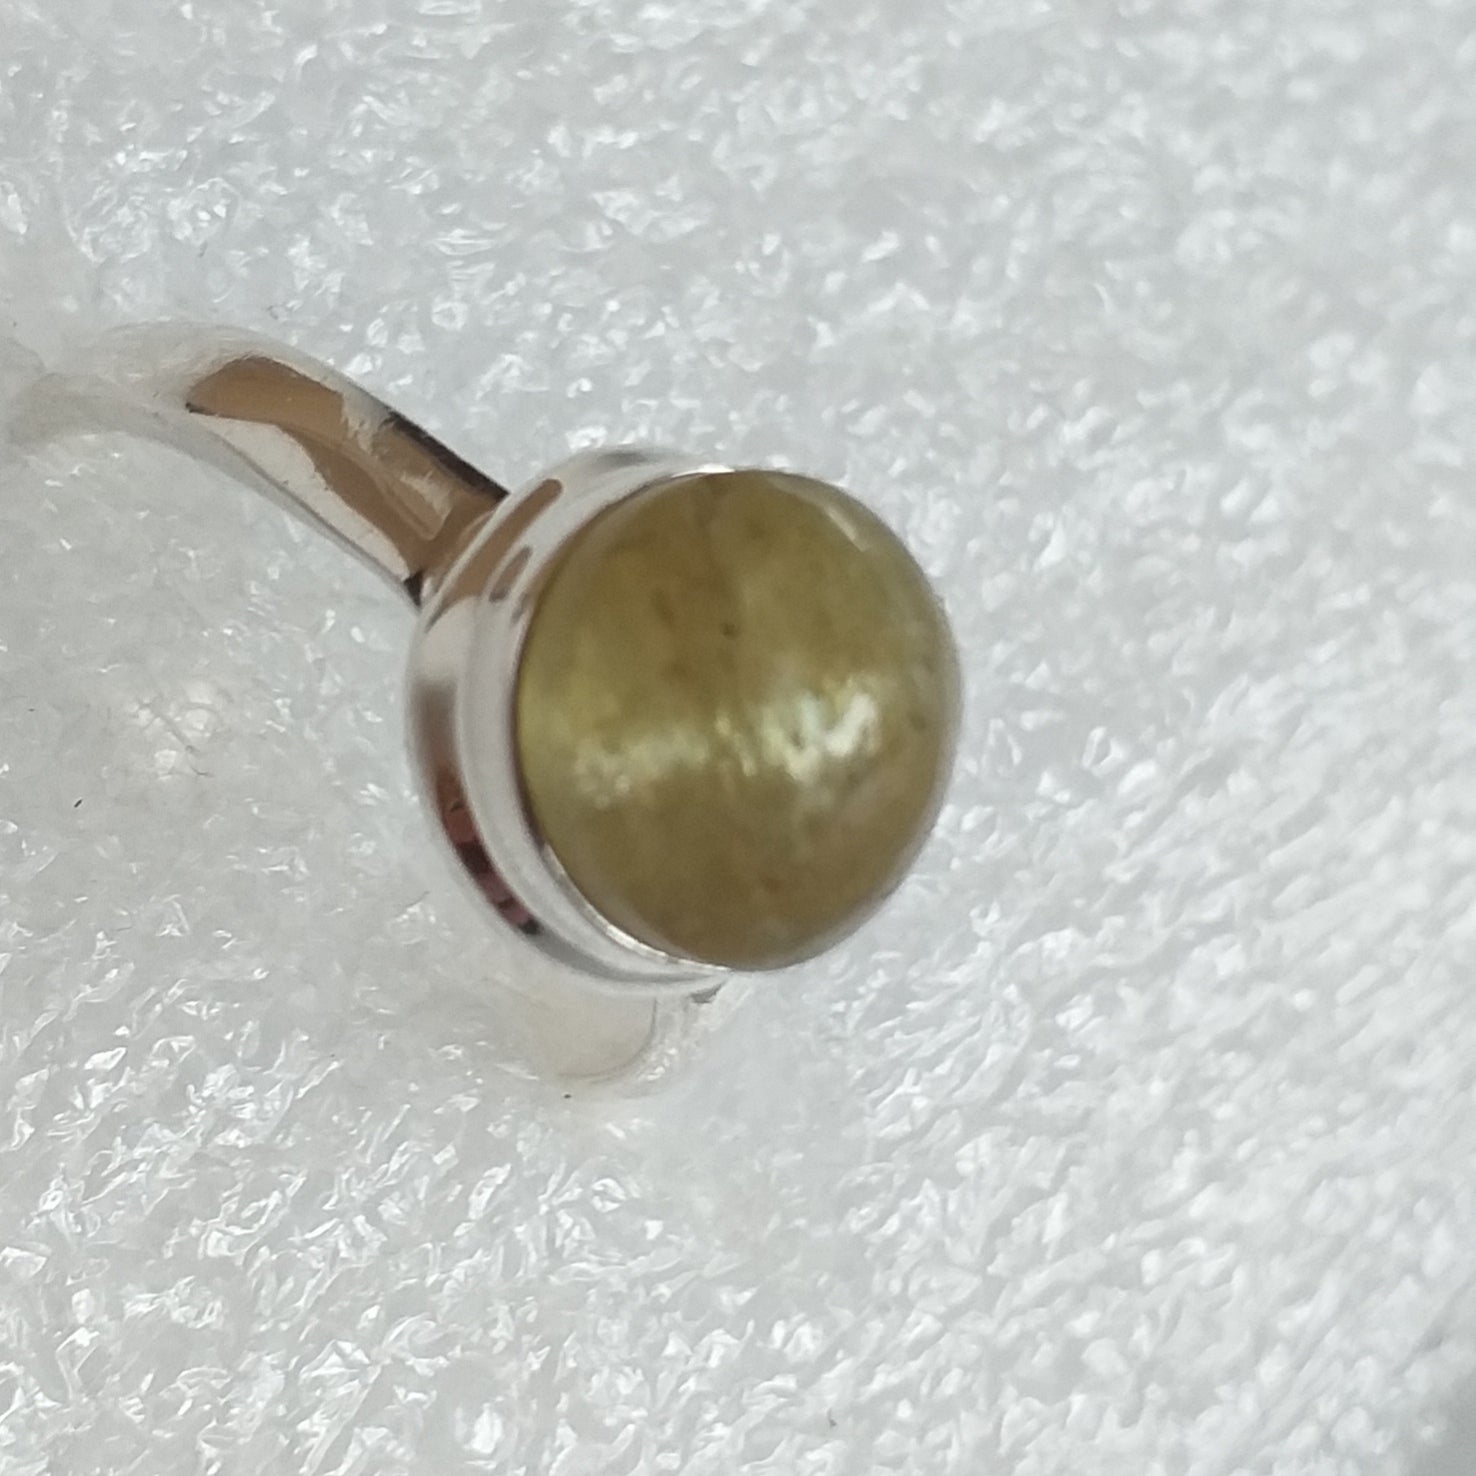 CHRYSOBERYLL Katzenauge Ring Gr. 17 925 Silber Beryll